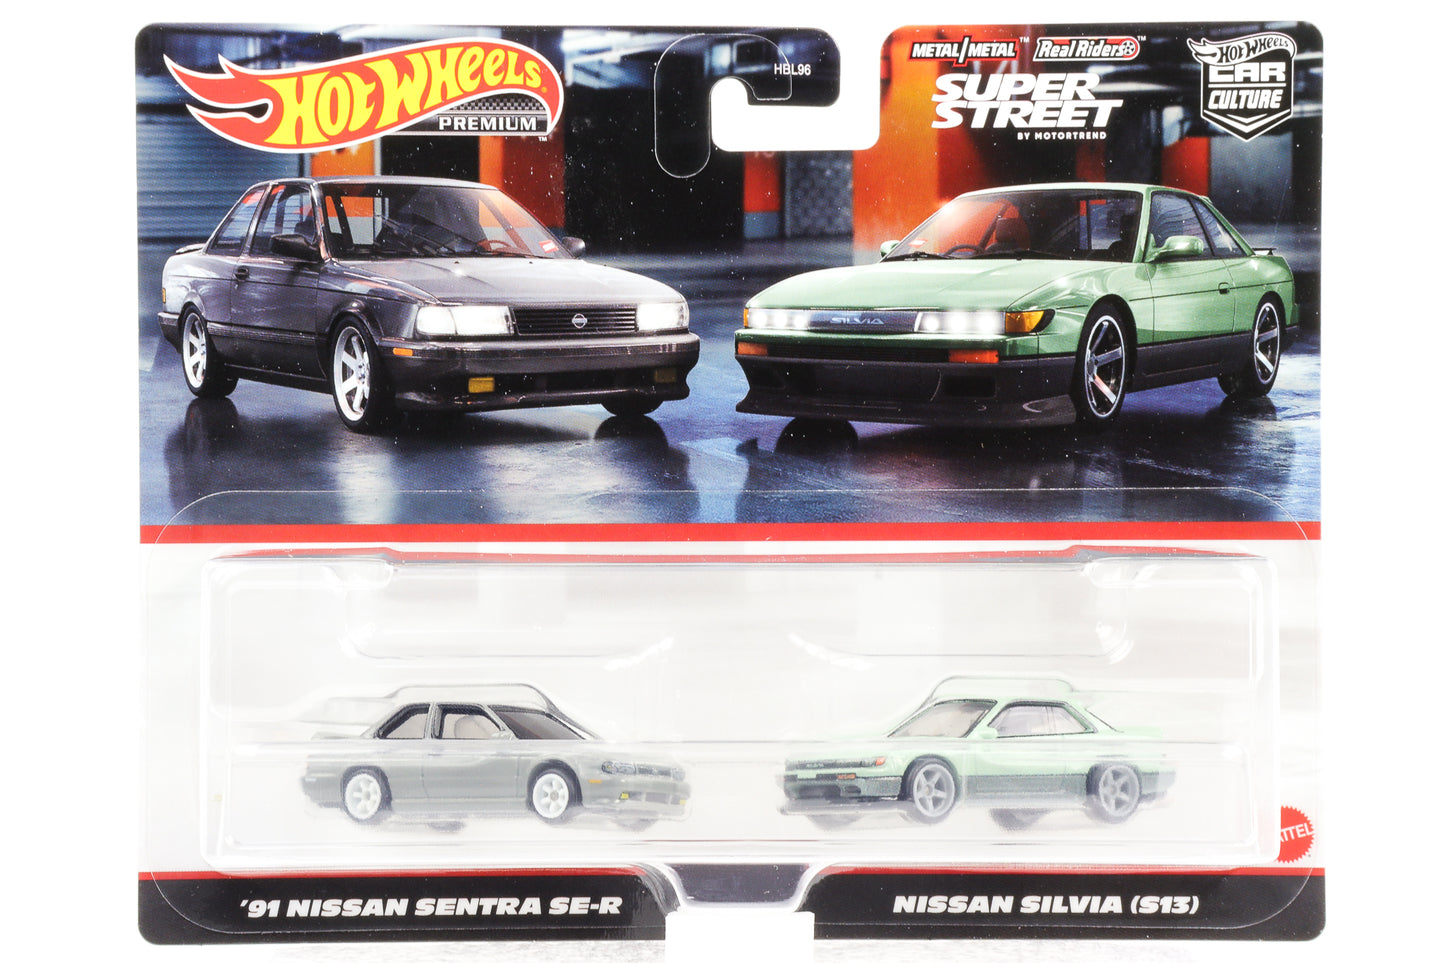 1:64 Conjunto de 2 1991 Nissan Sentra SE-R + Nissan Silvia (S13) Hot Wheels Premium